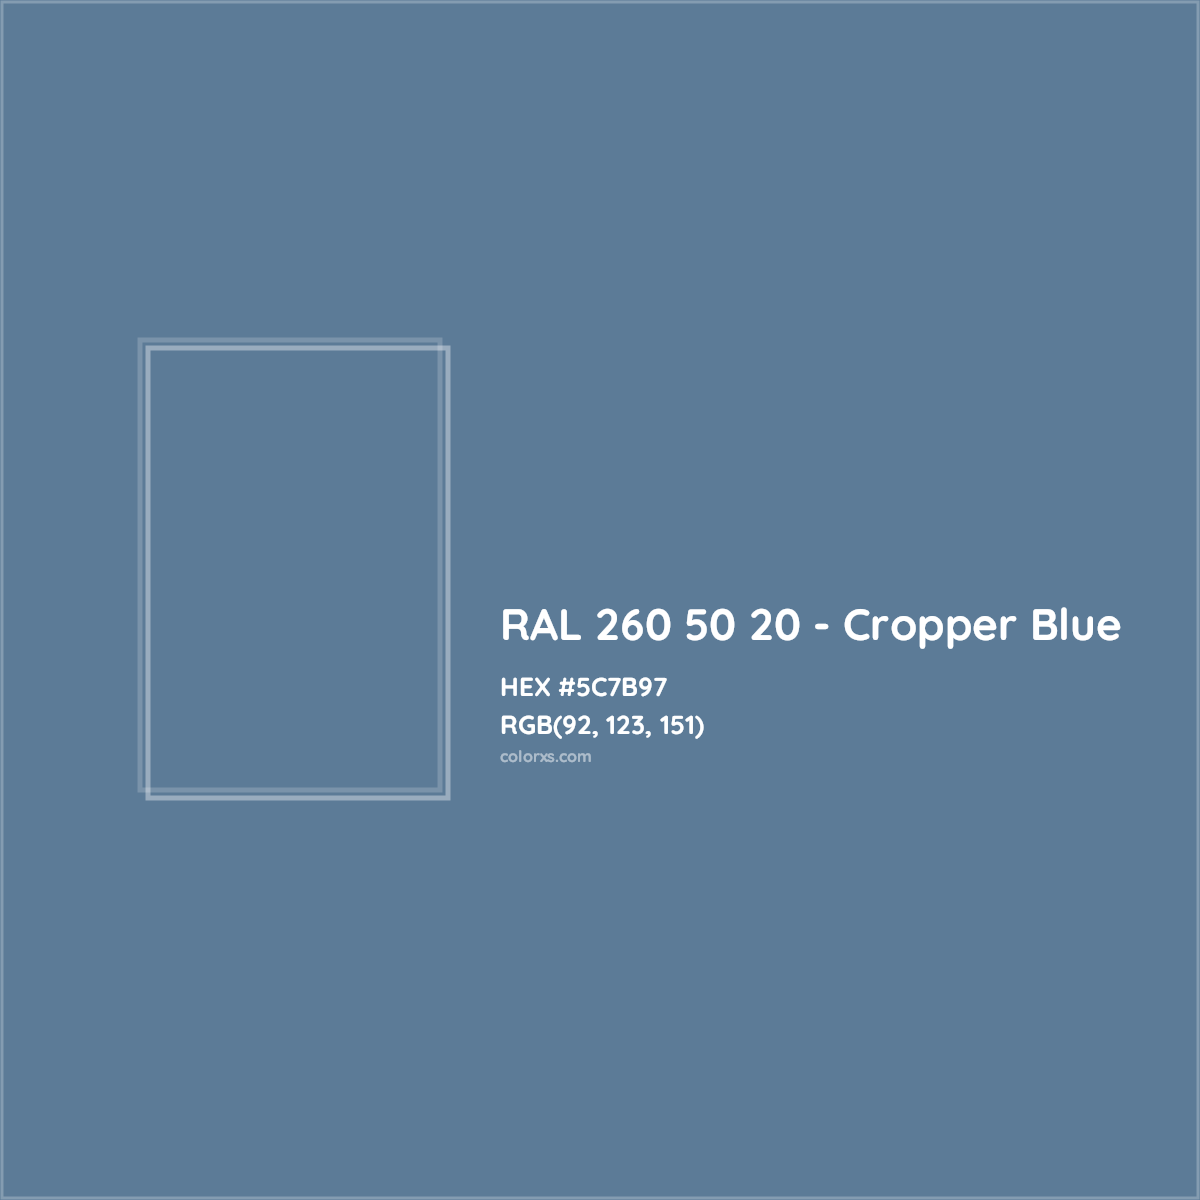 HEX #5C7B97 RAL 260 50 20 - Cropper Blue CMS RAL Design - Color Code